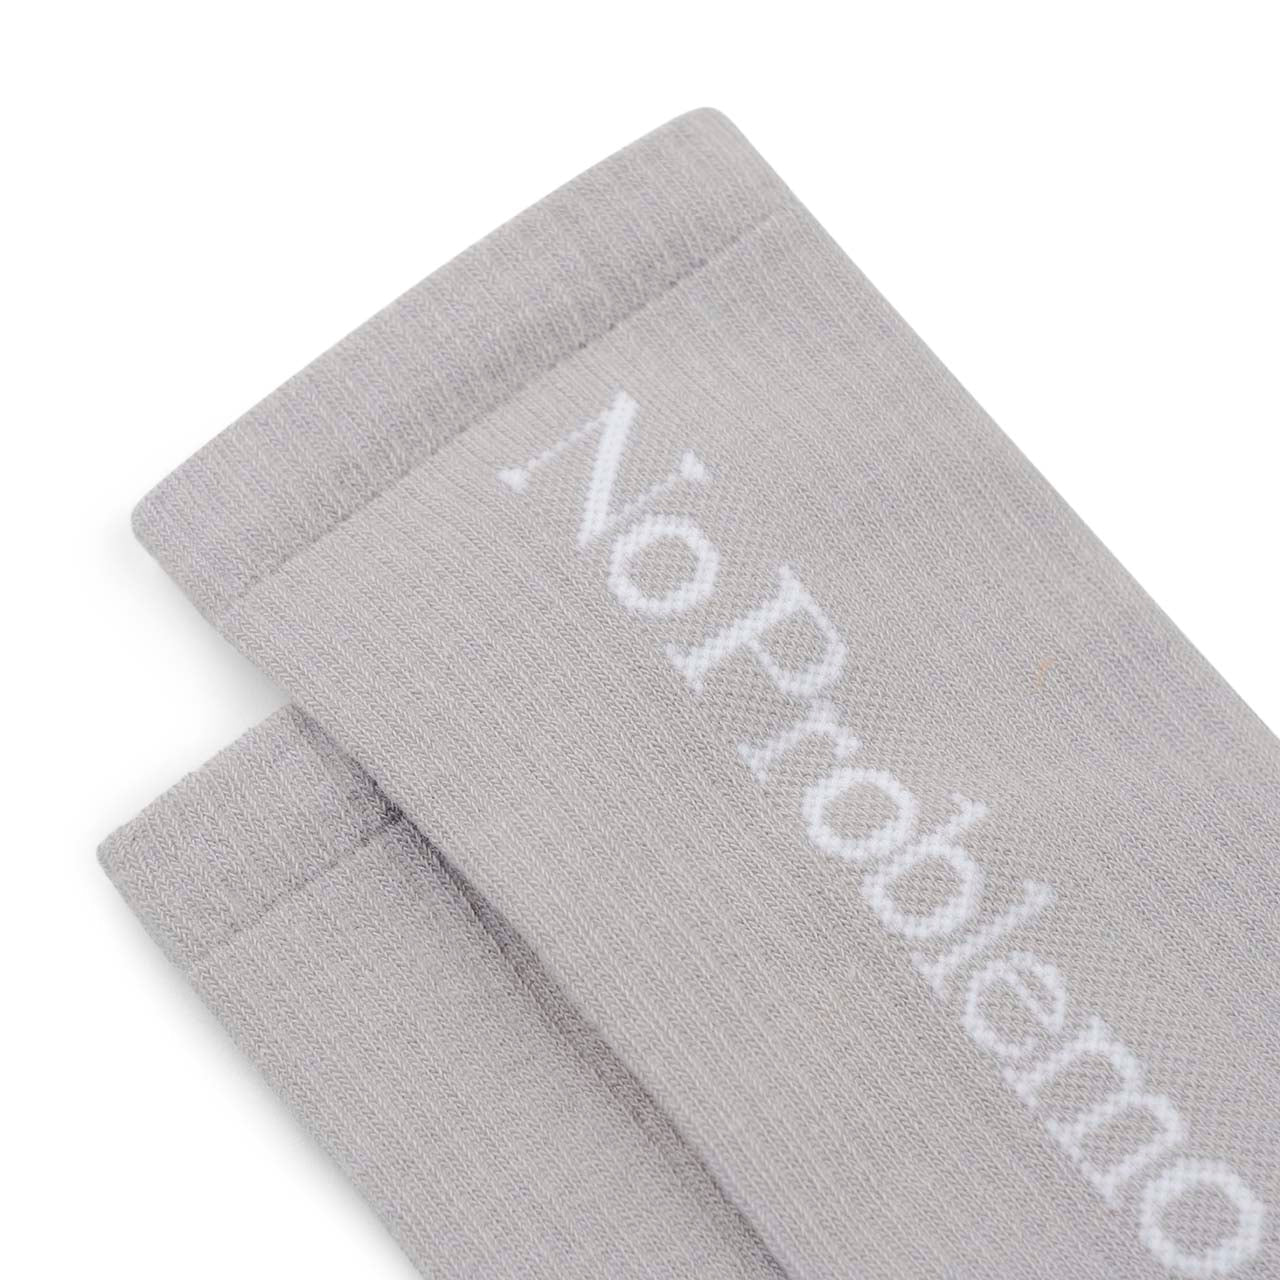 aries aries 'no problemo' socks (grey)